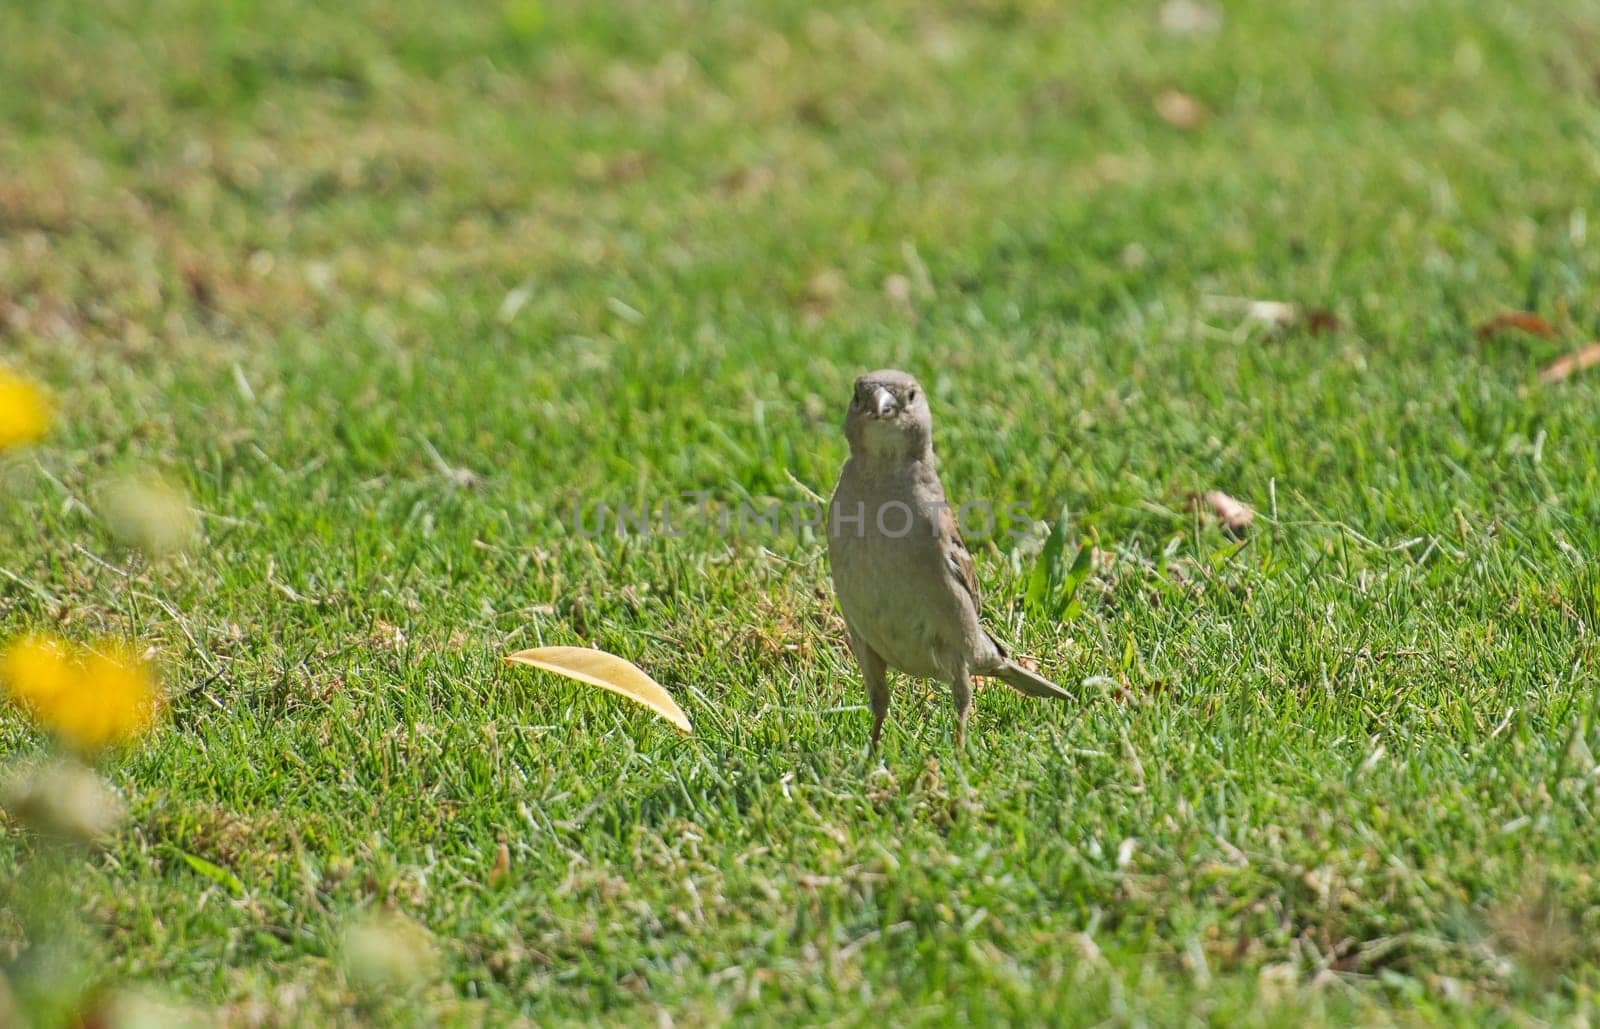 House sparrow stood on grass in garden by paulvinten